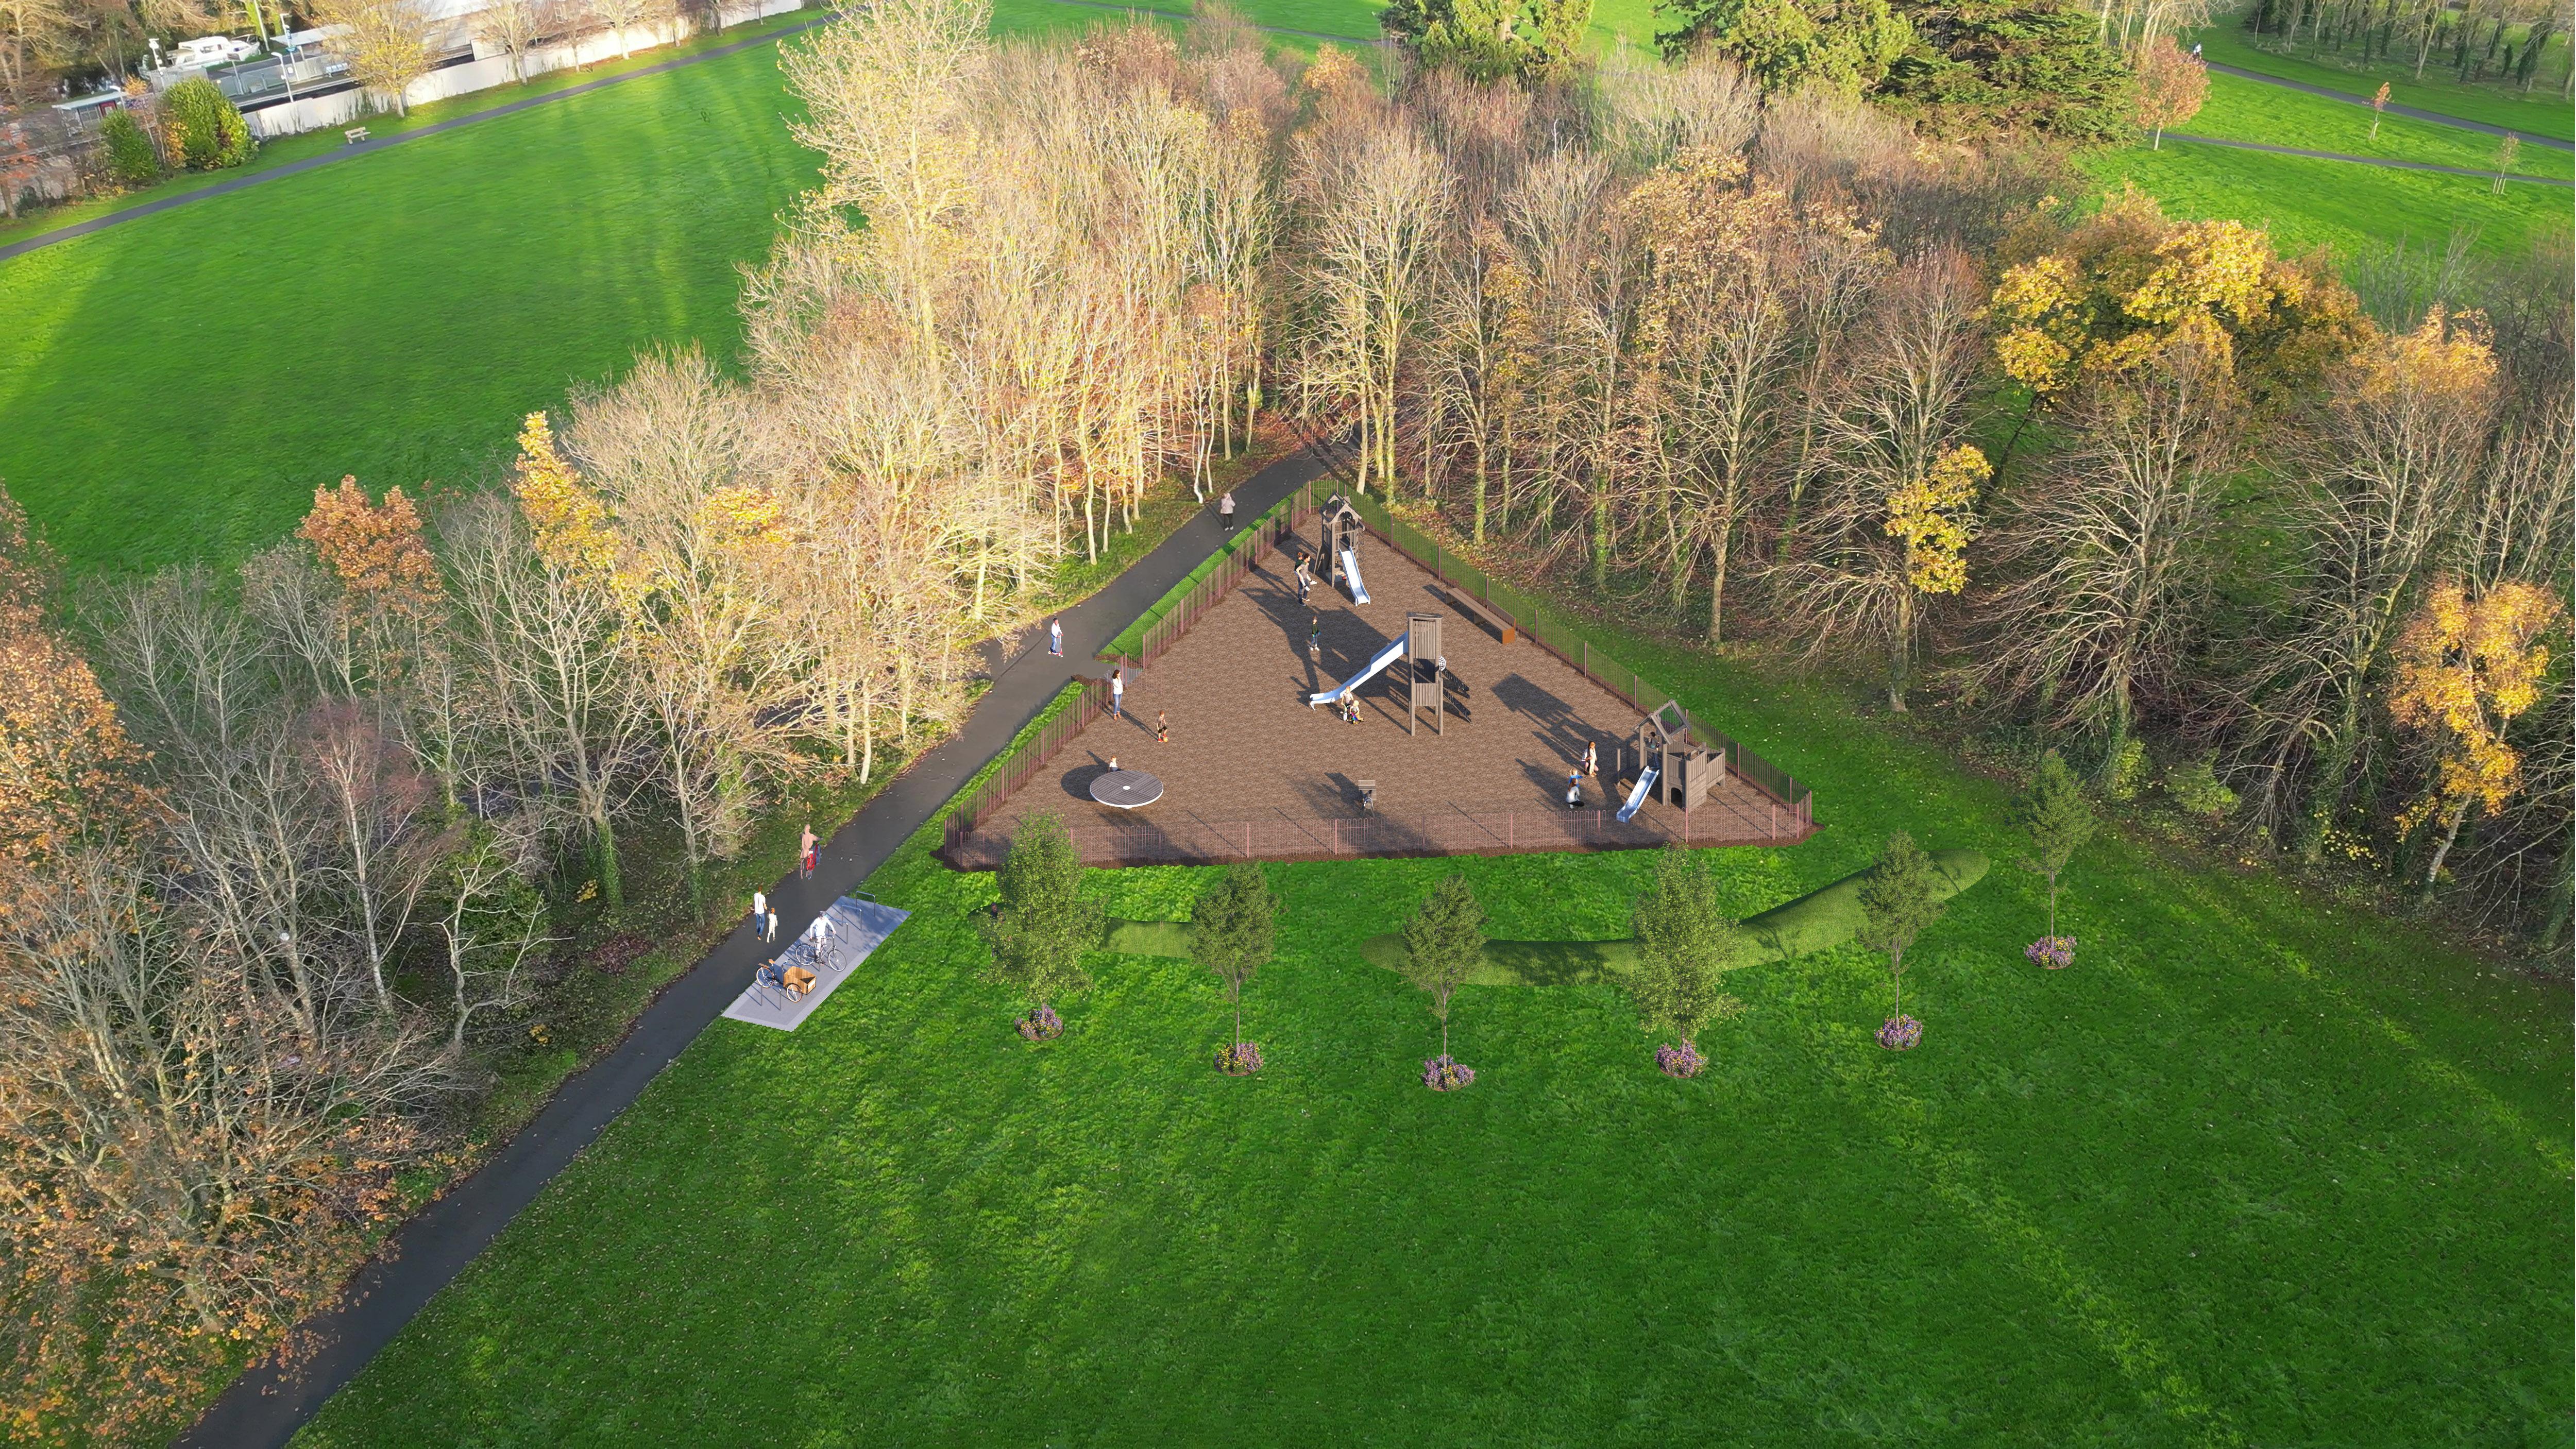 Laurel Lodge Aerial View.jpg